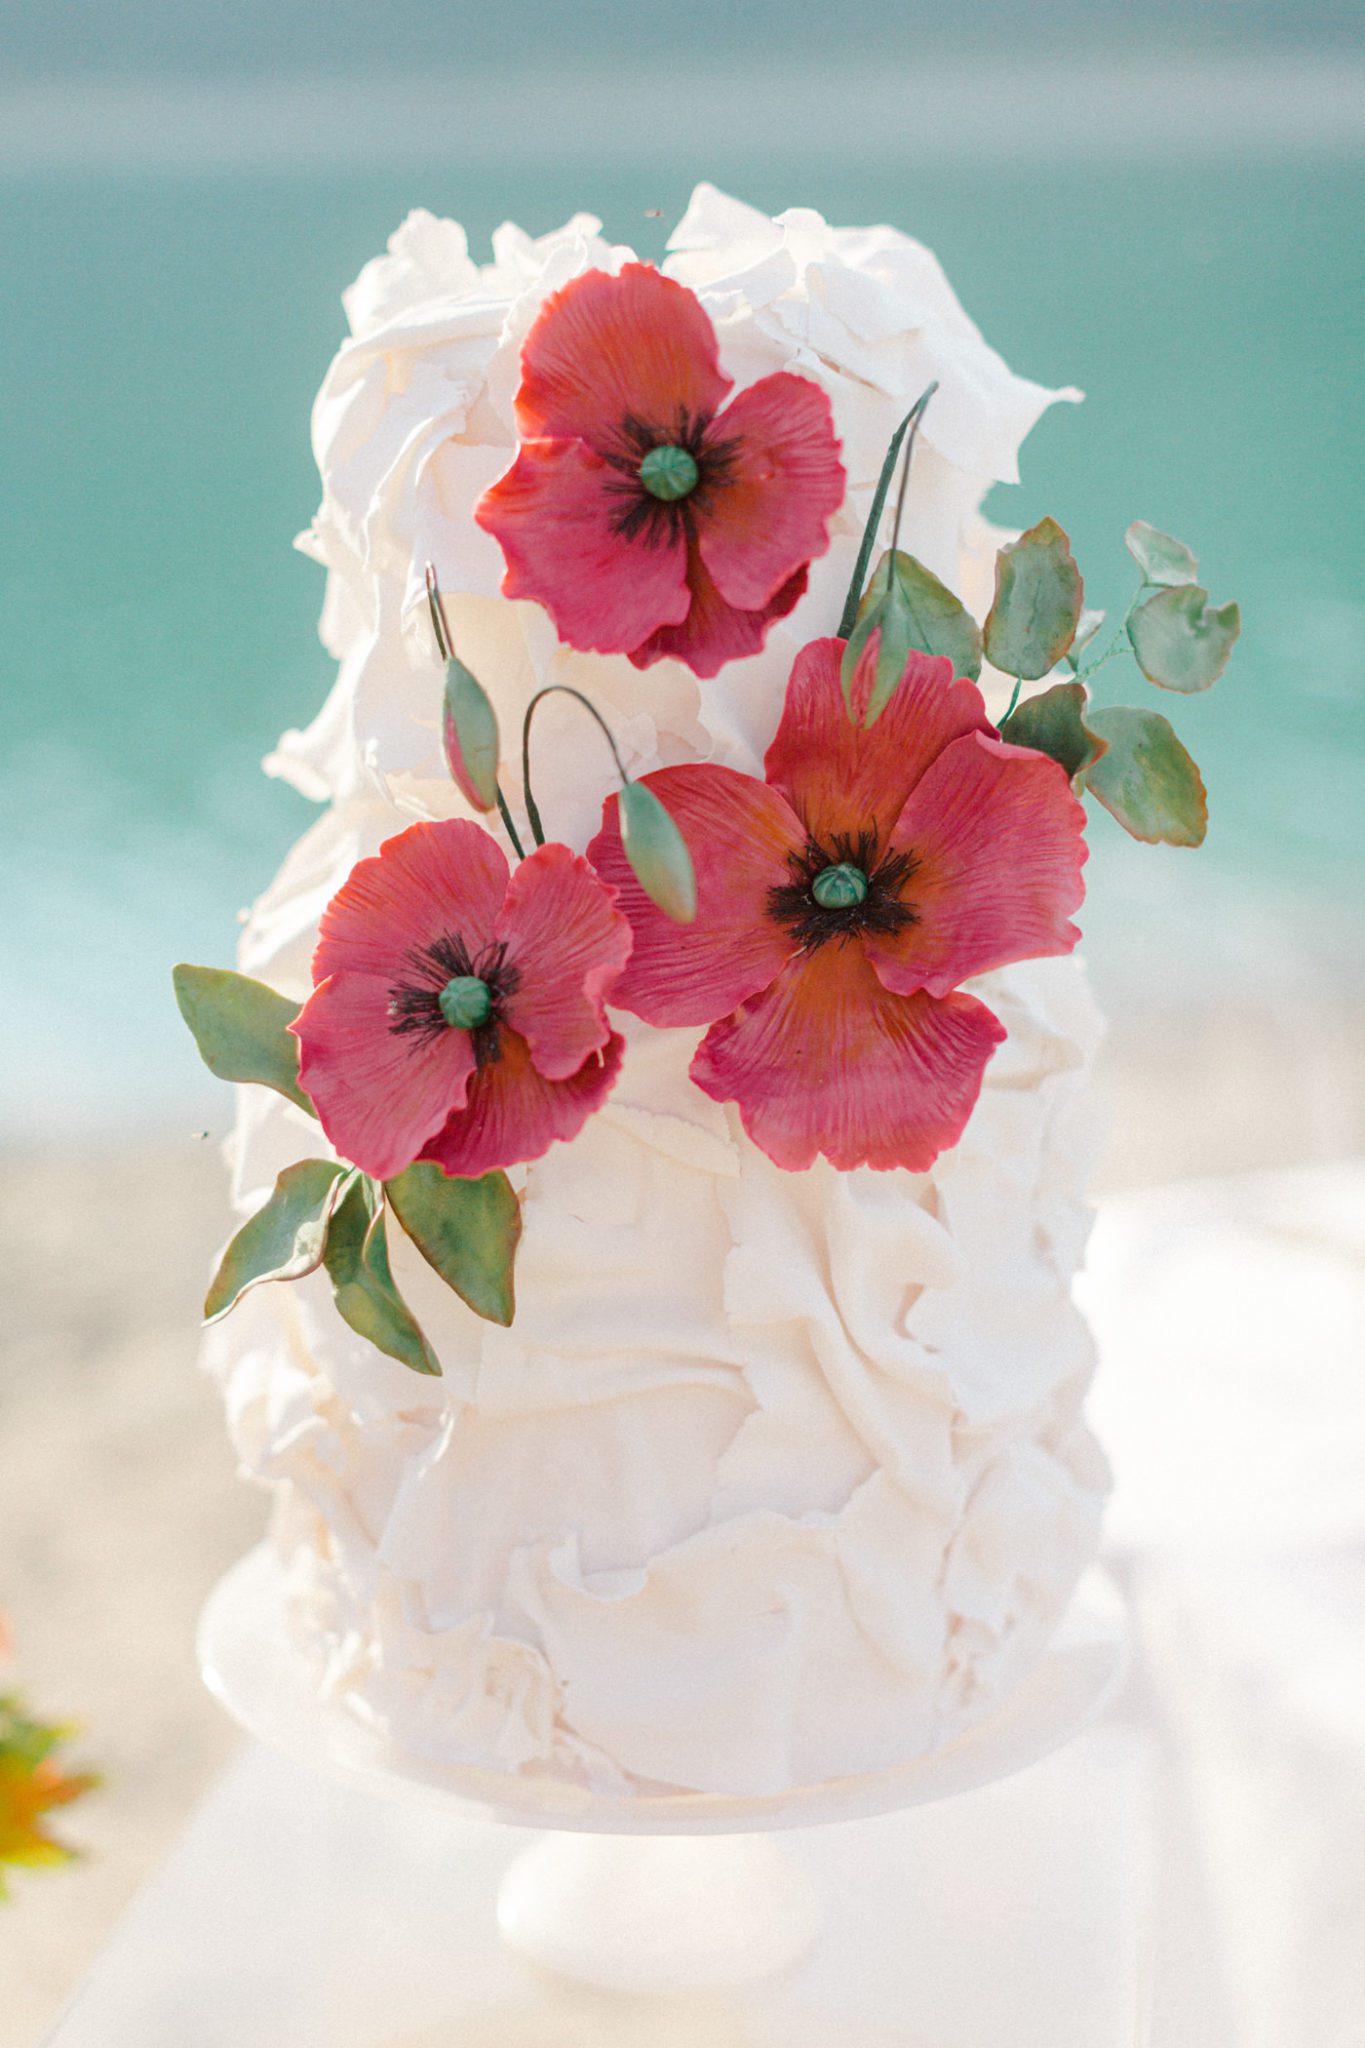 Bright red handmade sugar flower poppies on a white ruffled wedding cake